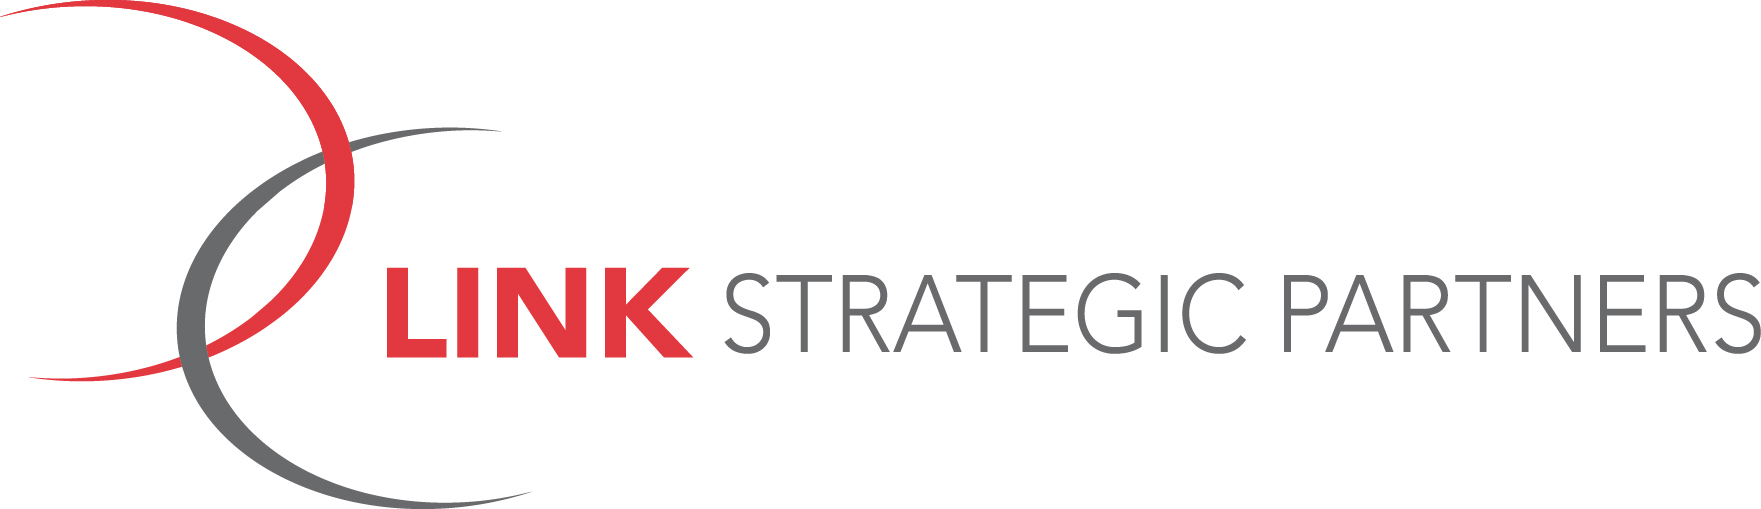 LINK Strategic Partn